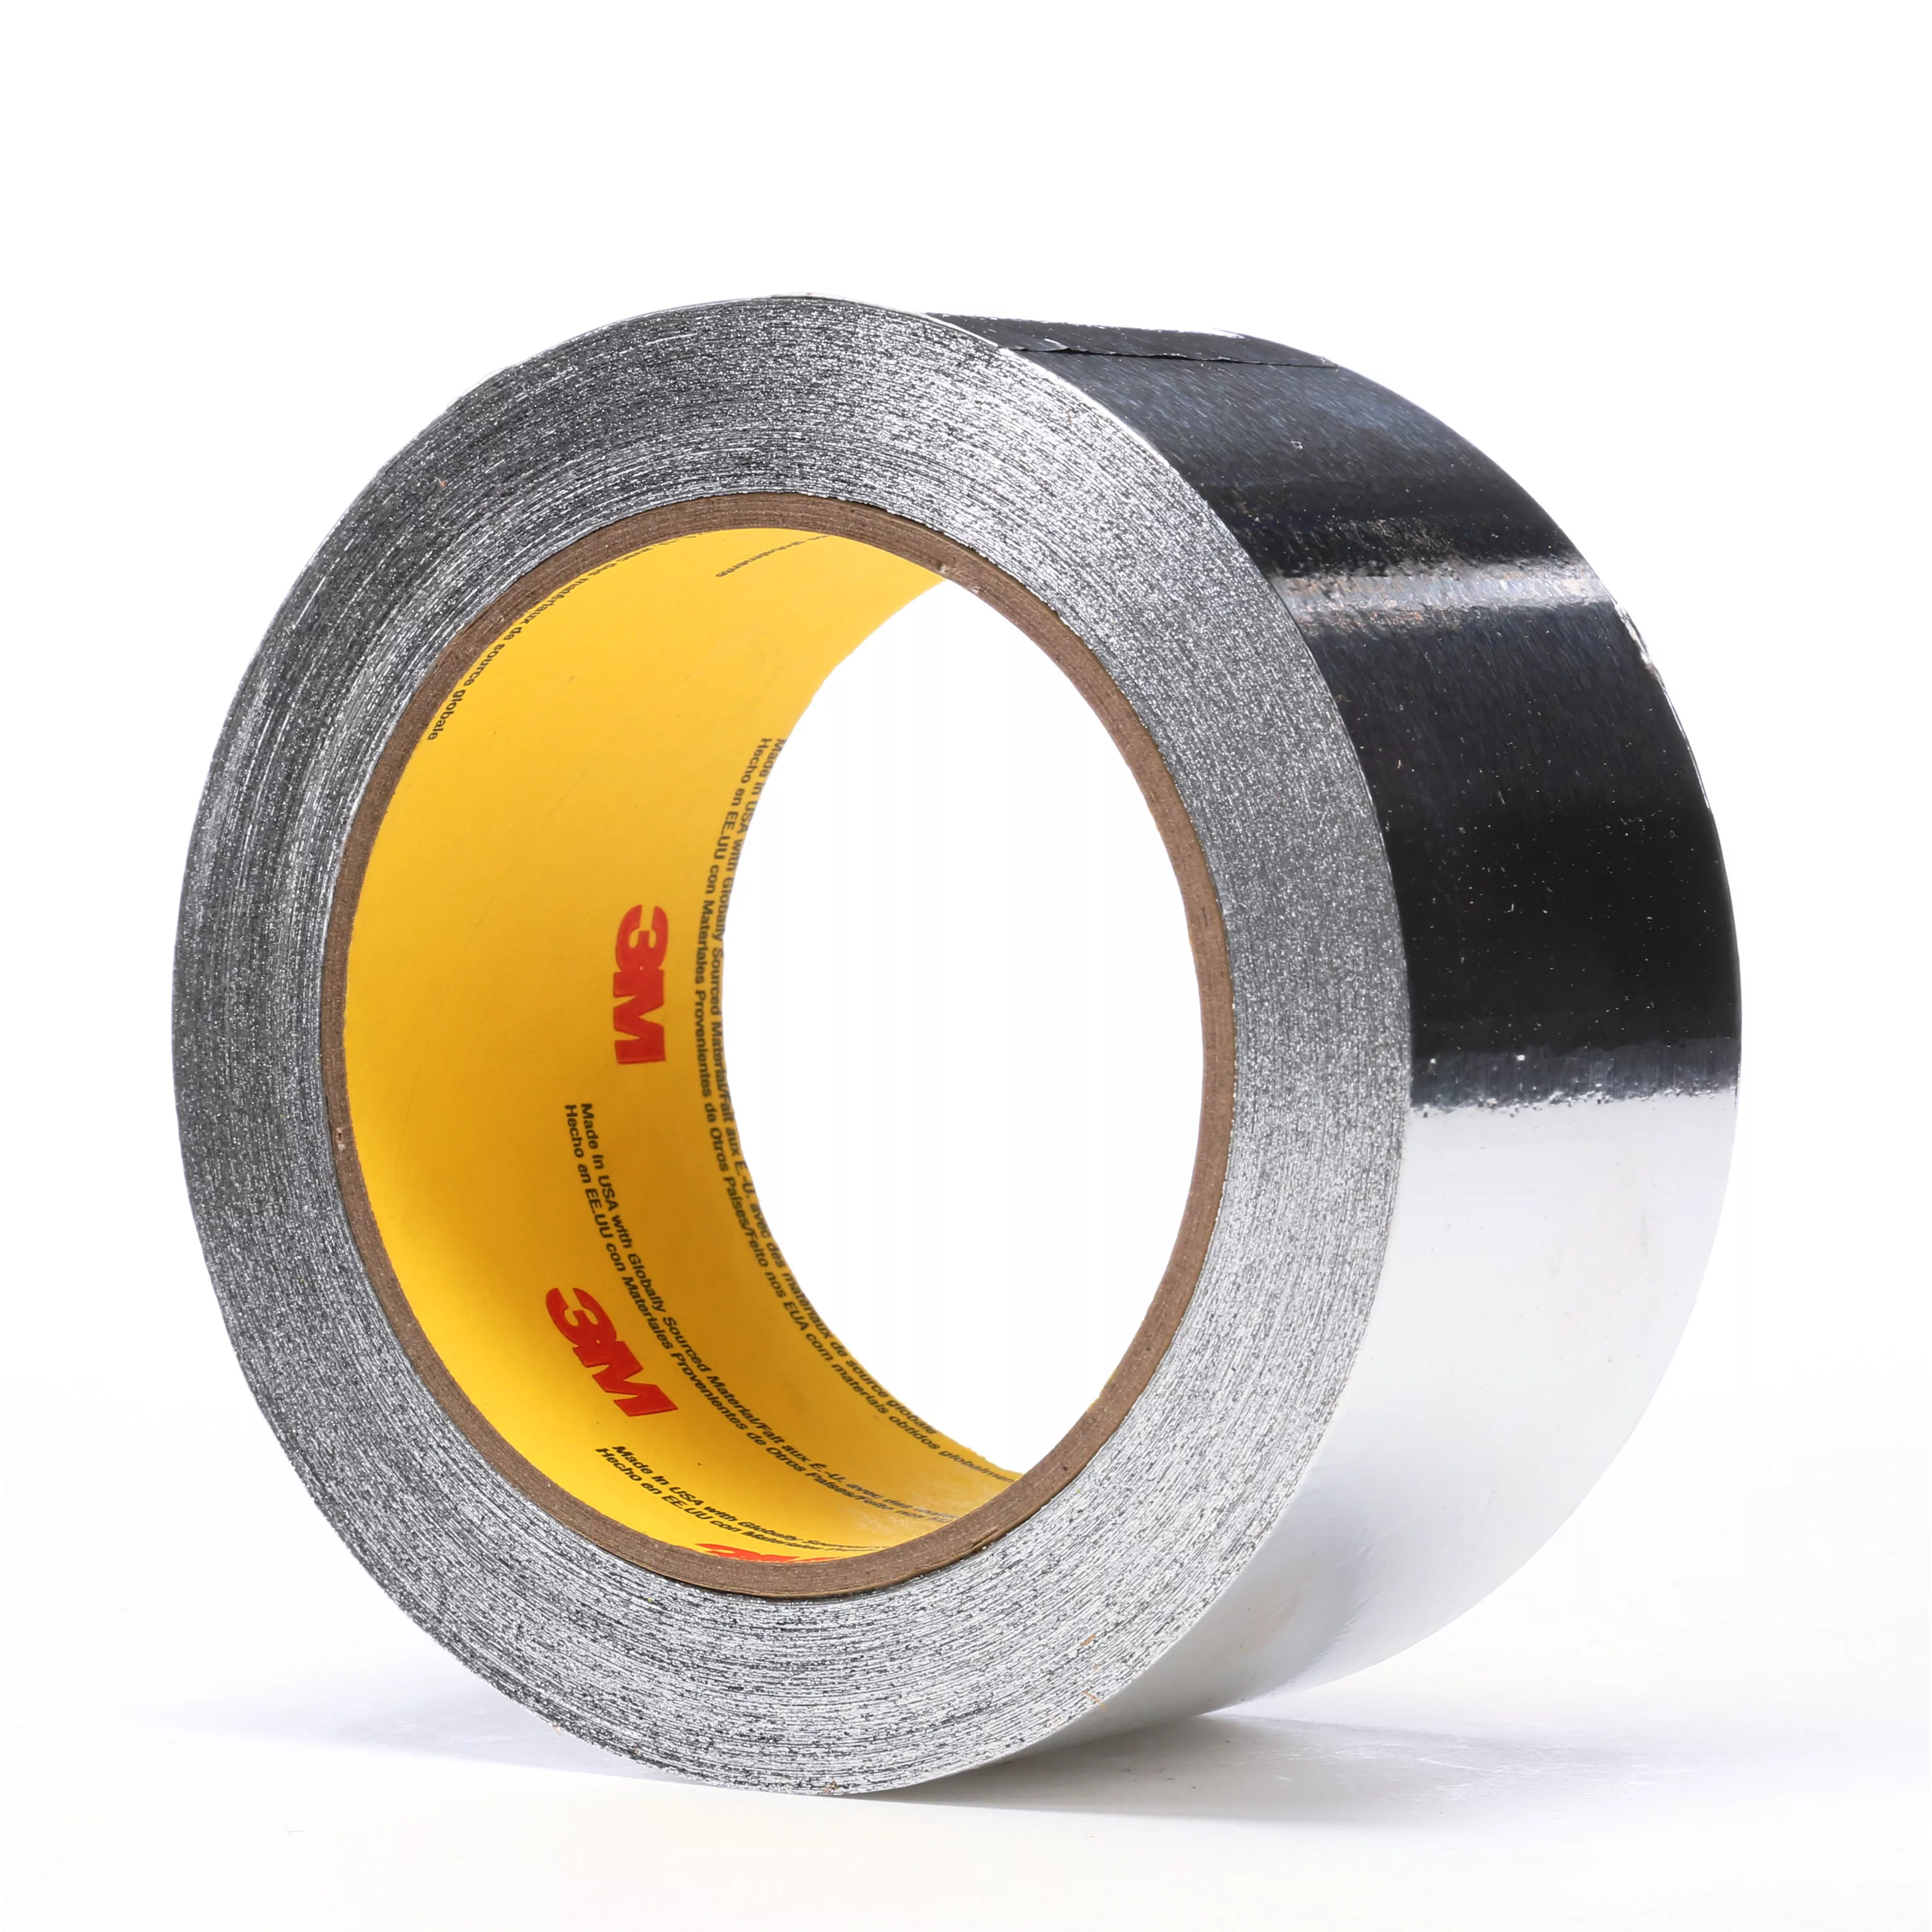 3M™ Aluminum Foil Tape 4380, Silver, 2 in x 55 yd, 3.25 mil, 24
Rolls/Case